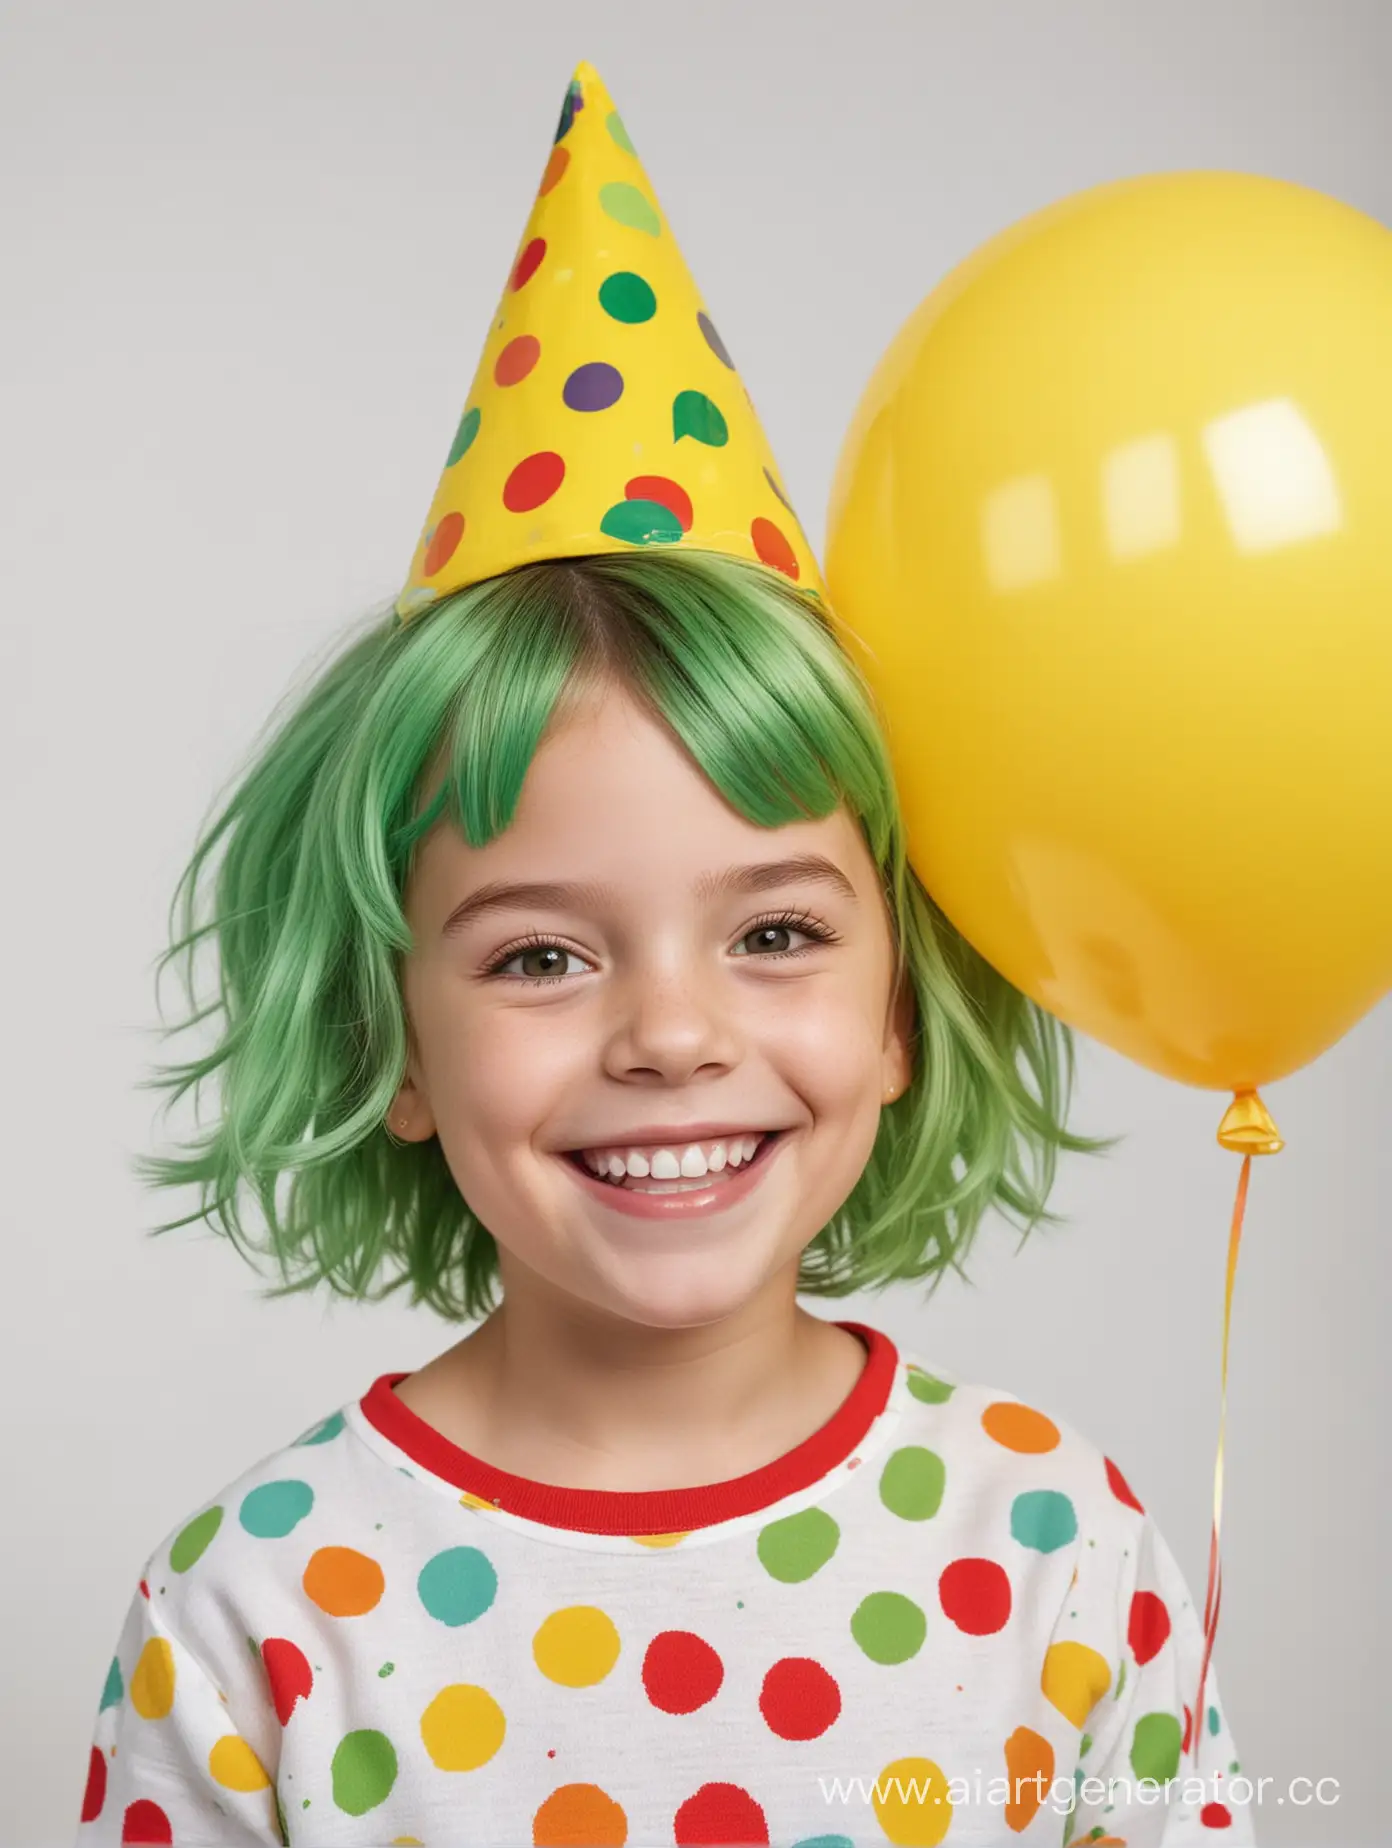 Joyful-European-Girl-with-Bright-Green-Hair-and-Red-Balloon